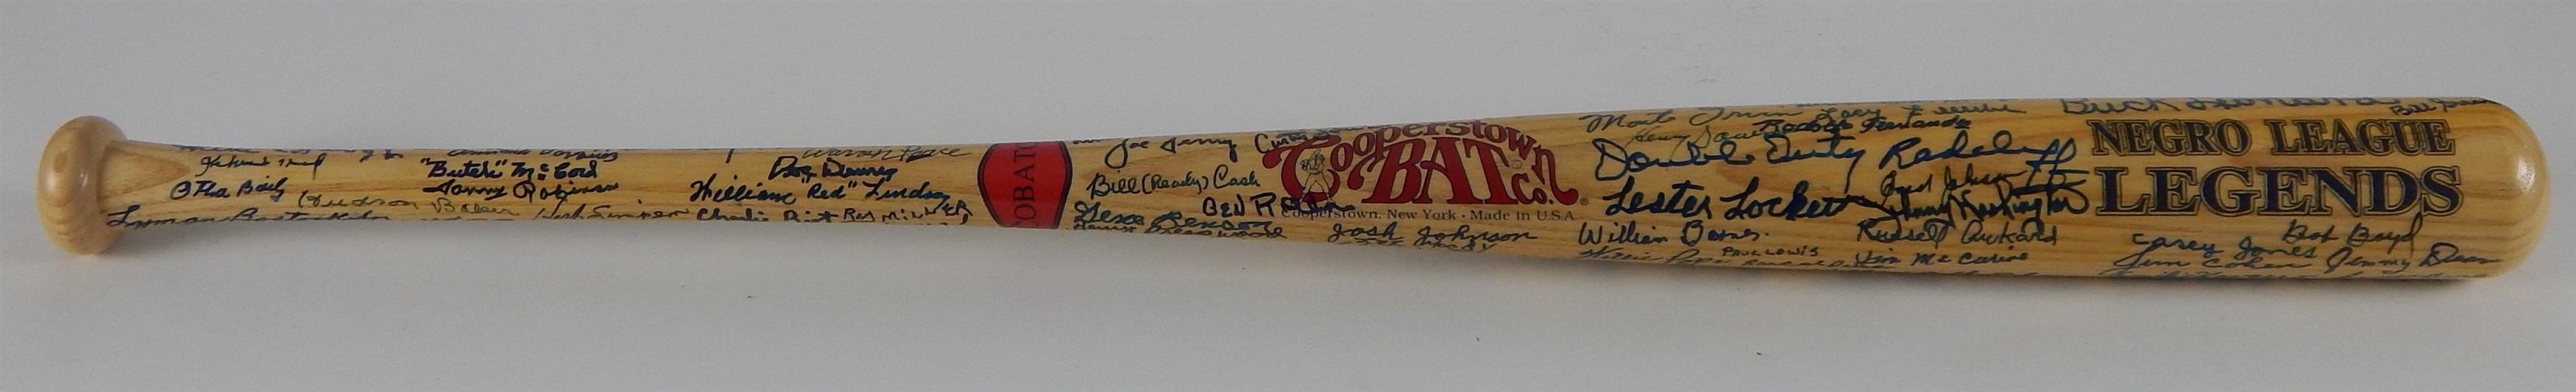 Baseball Autographs - Negro League Legends Cooperstown Signature Bat Covered in Autographs!